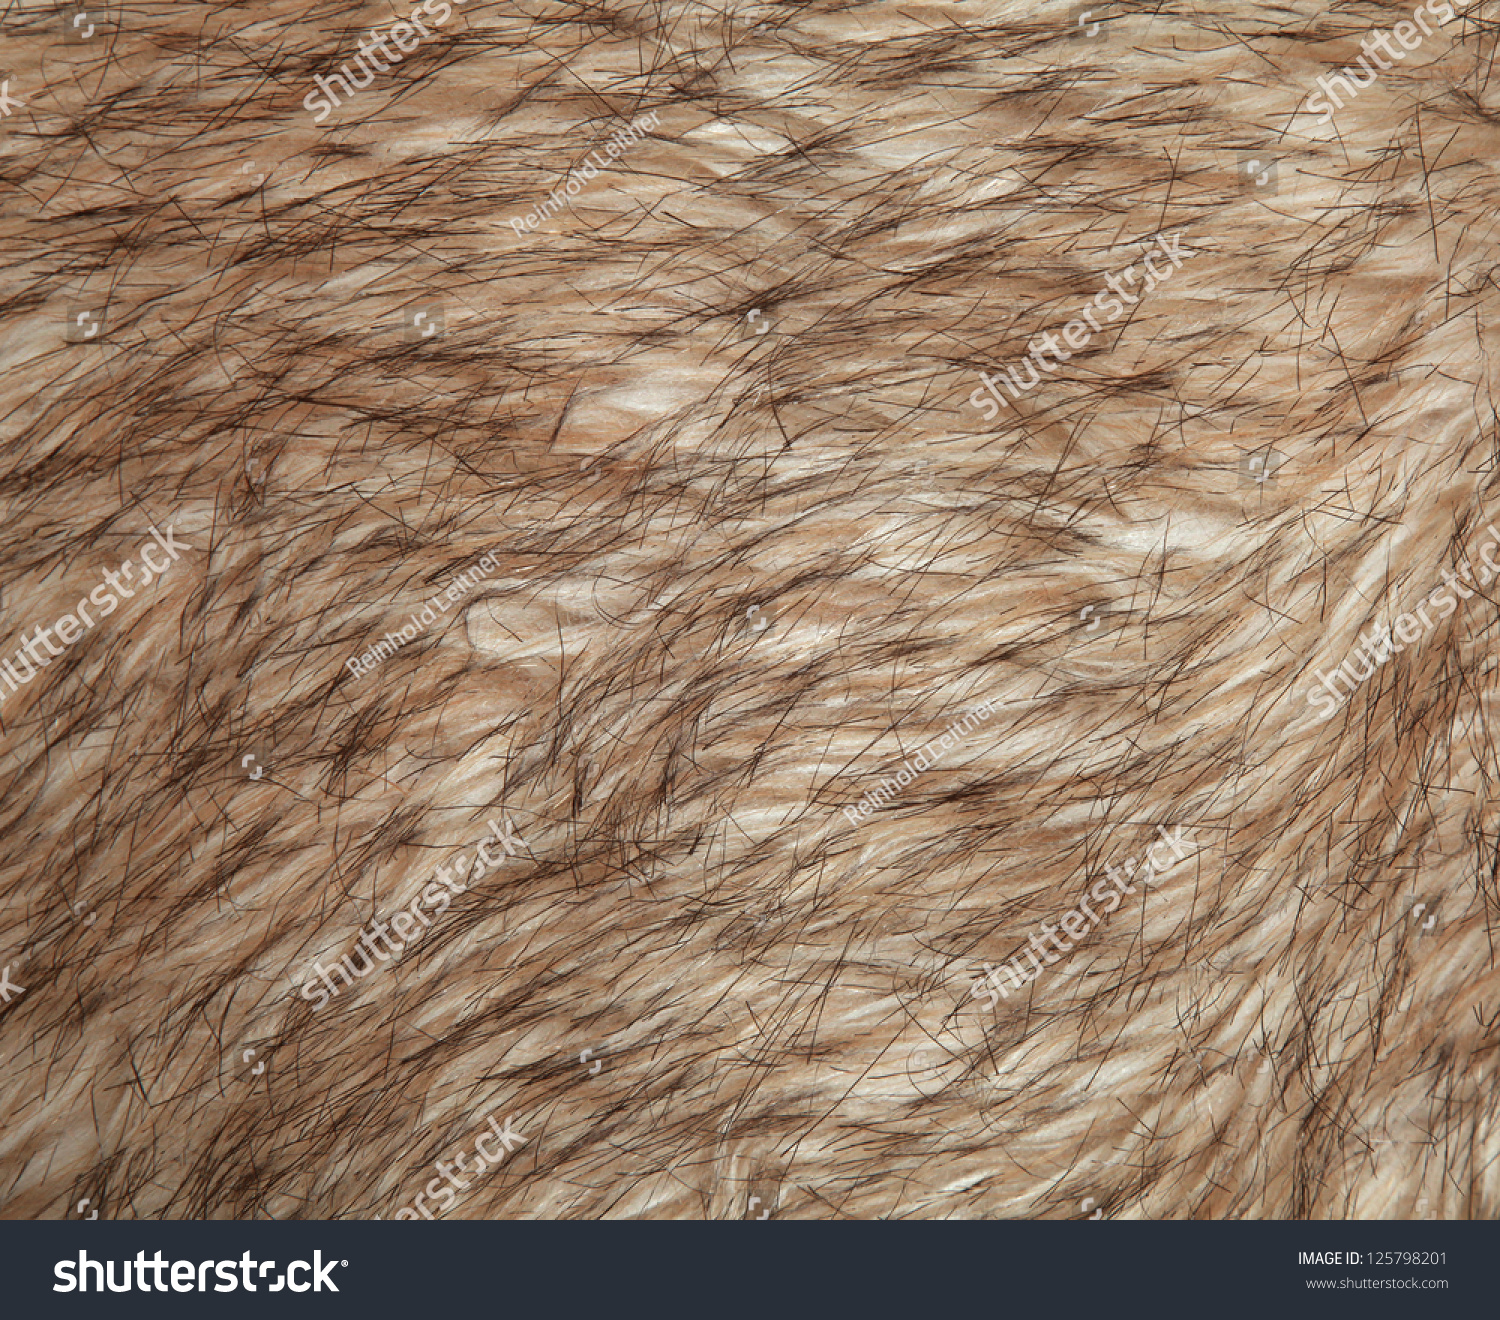 Artificial Fur Texture Background Stock Photo 125798201 - Shutterstock